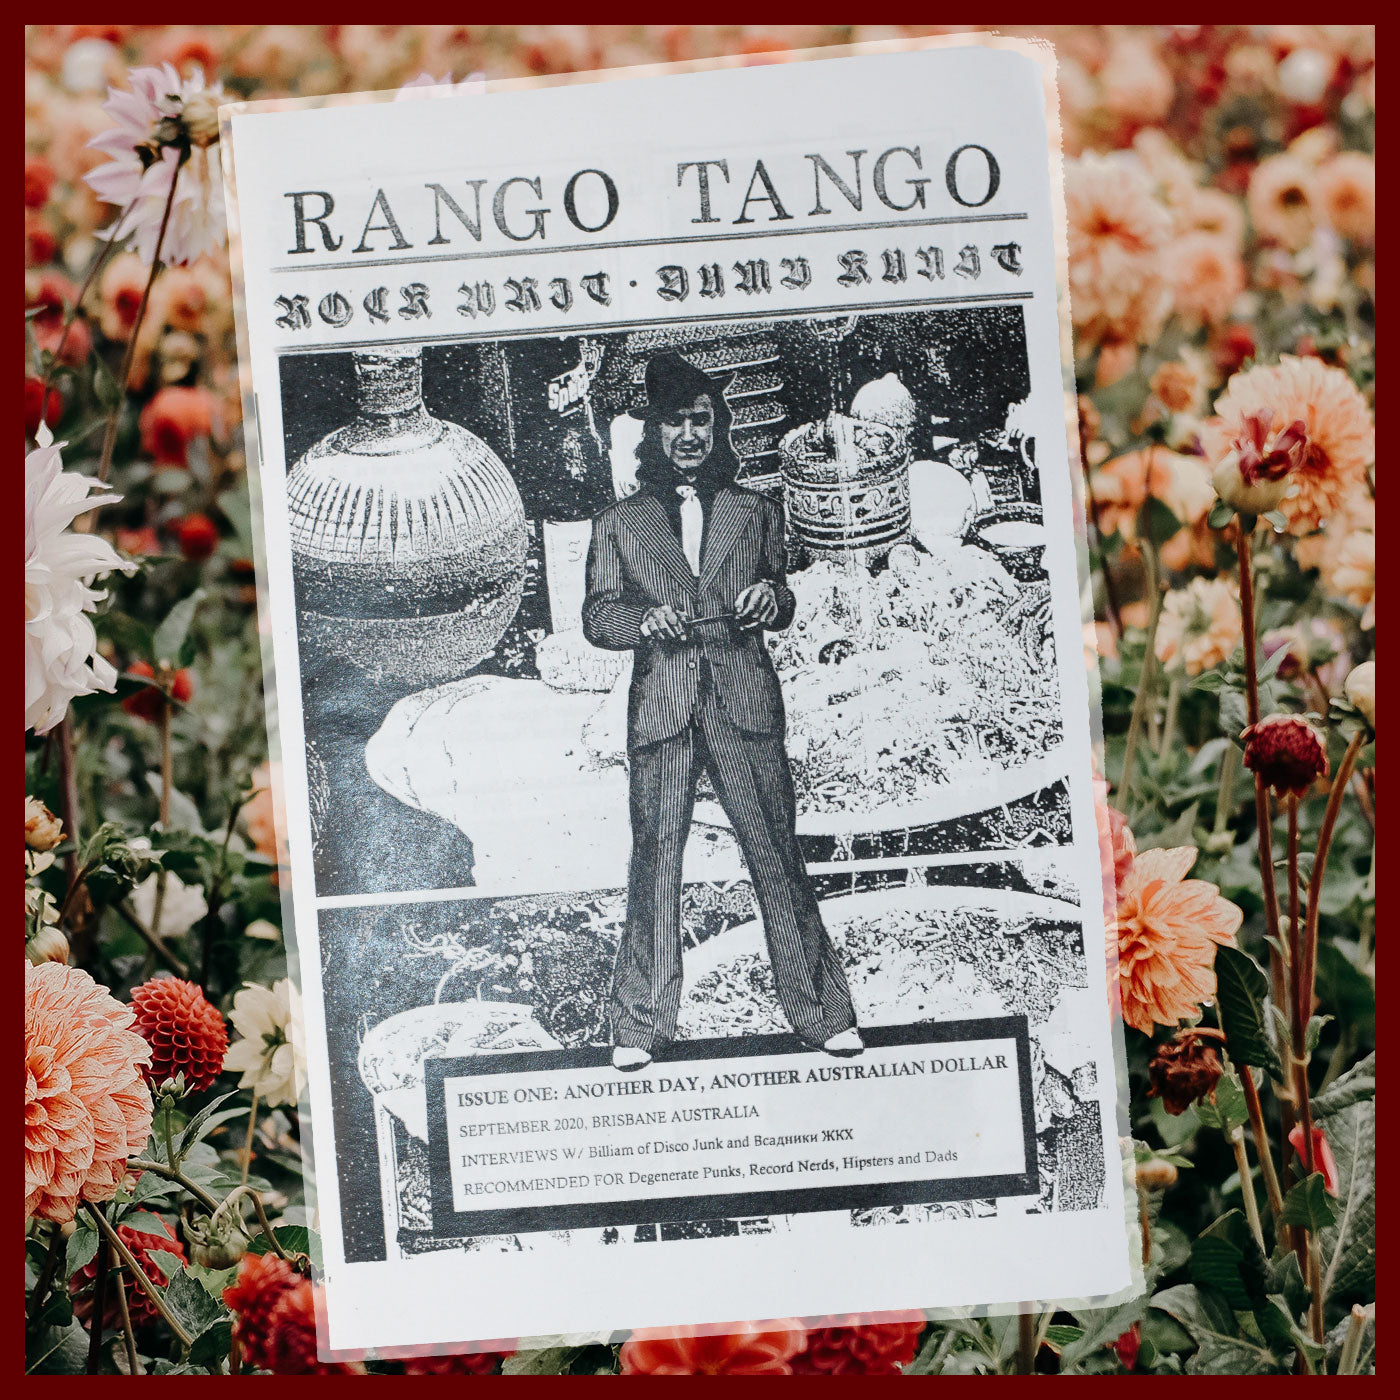 Rango Tango Issue One: Another Day, Another Australian Dollar [Zine]